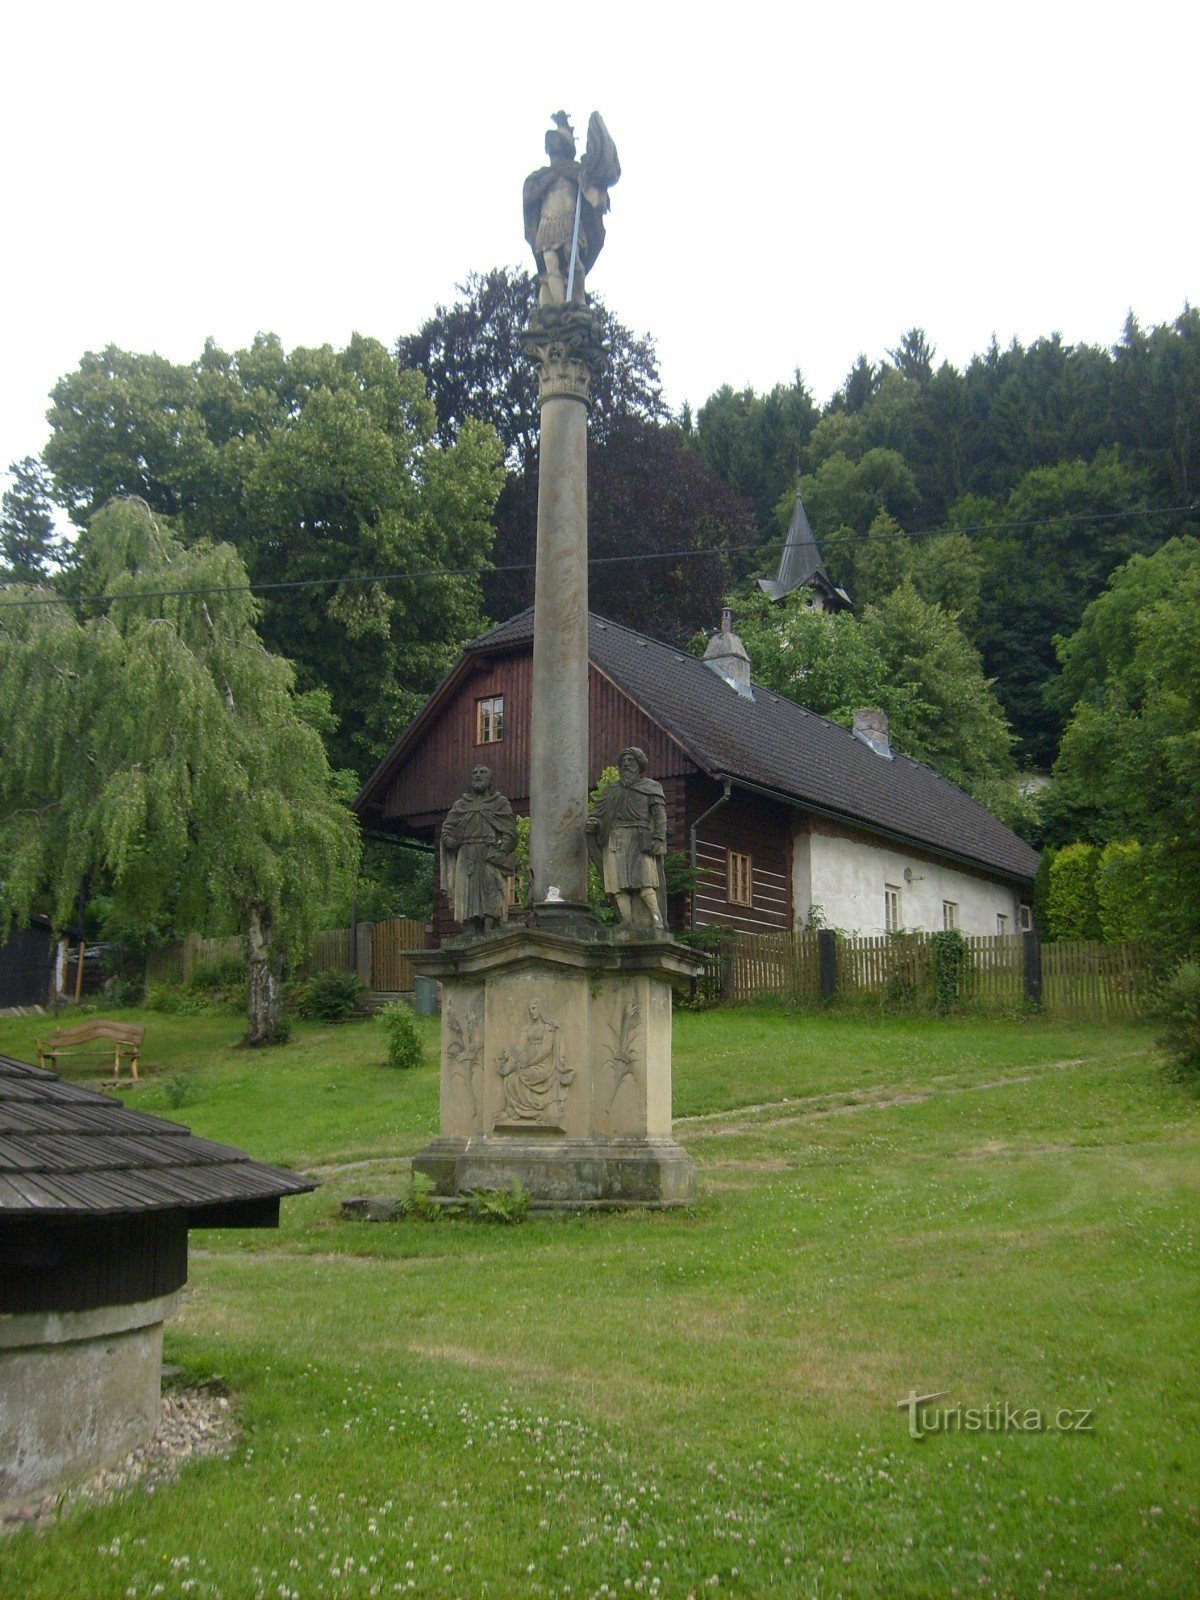 Marian column in the village of Potštejn